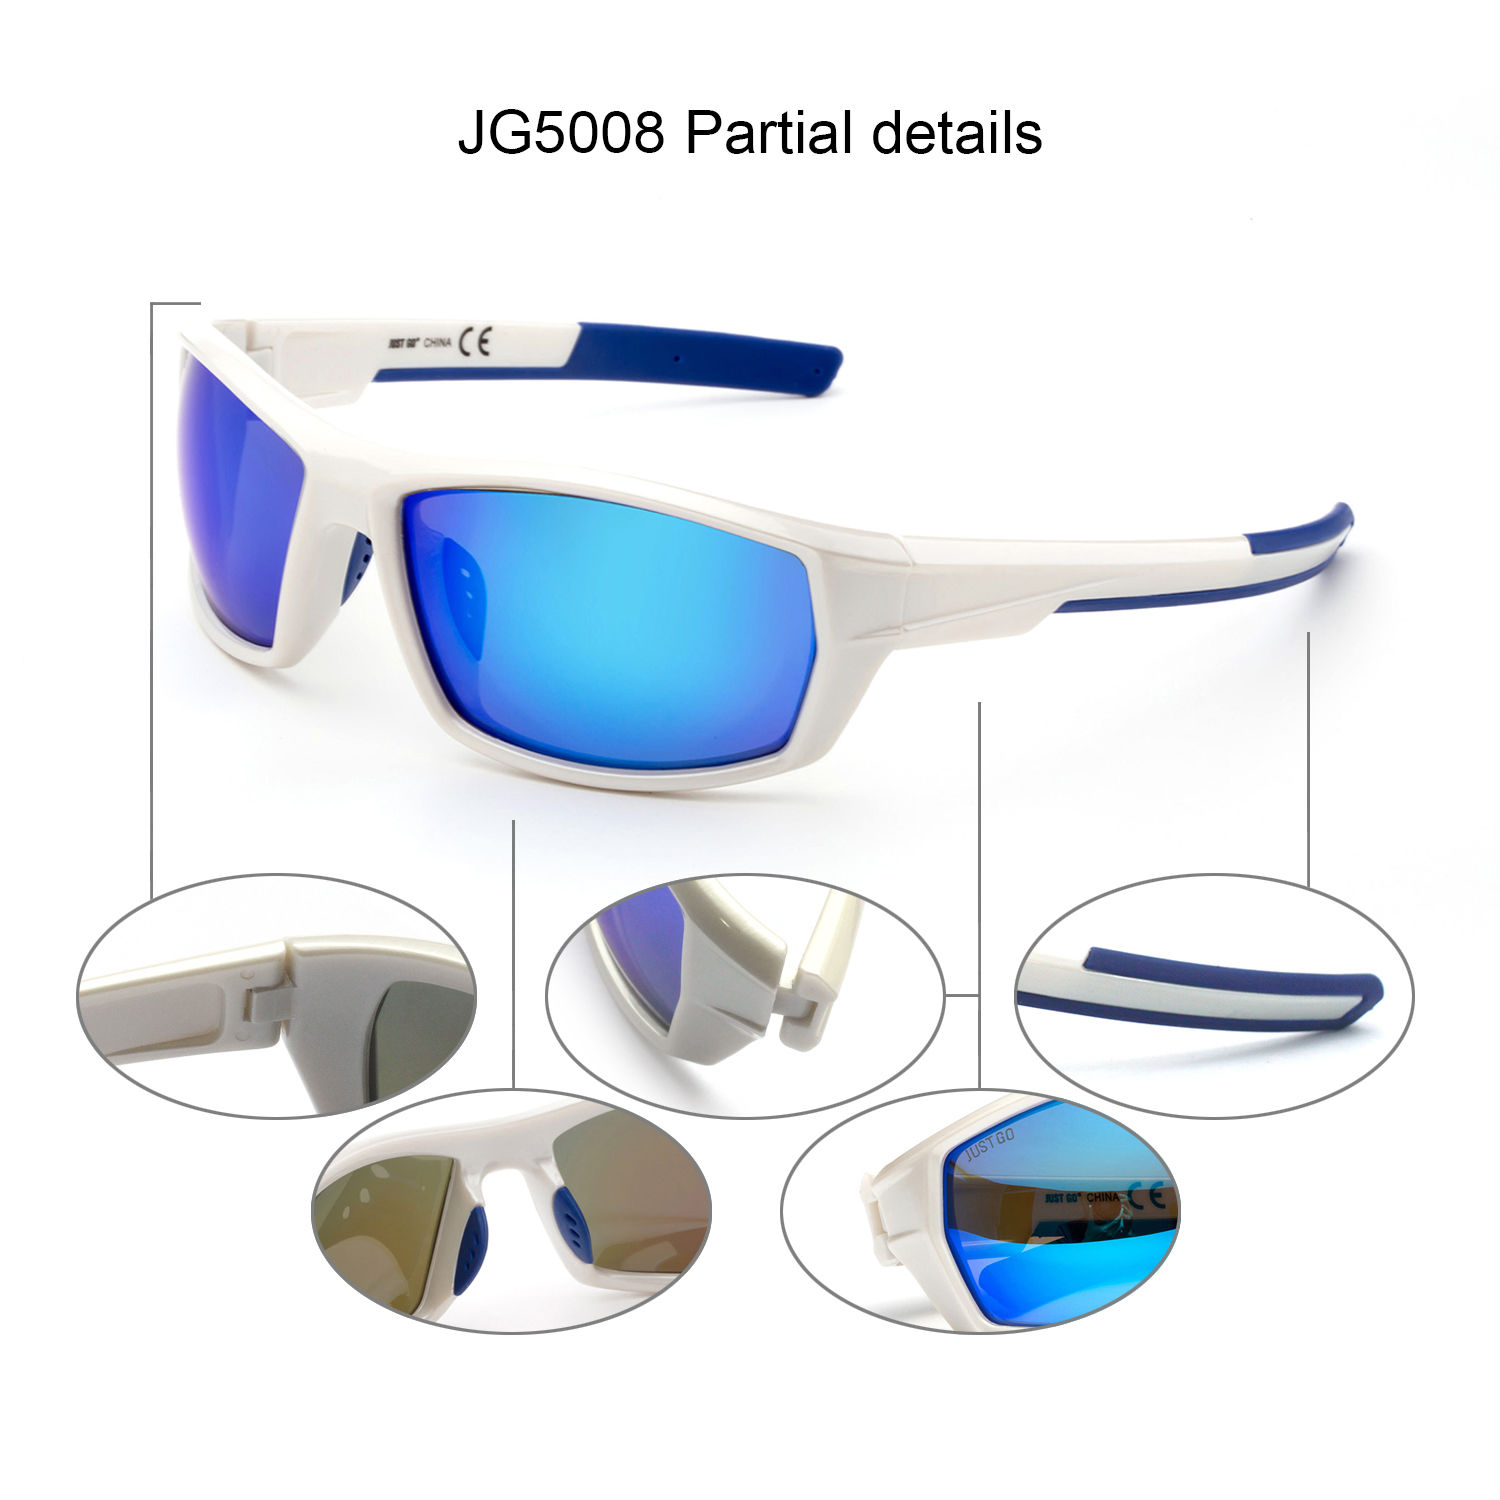 JUST GO Men's Polarized Lens Sports Sunglasses for Cycling Riding Baseball Running Golf, White, Revo Blue - image 3 of 7